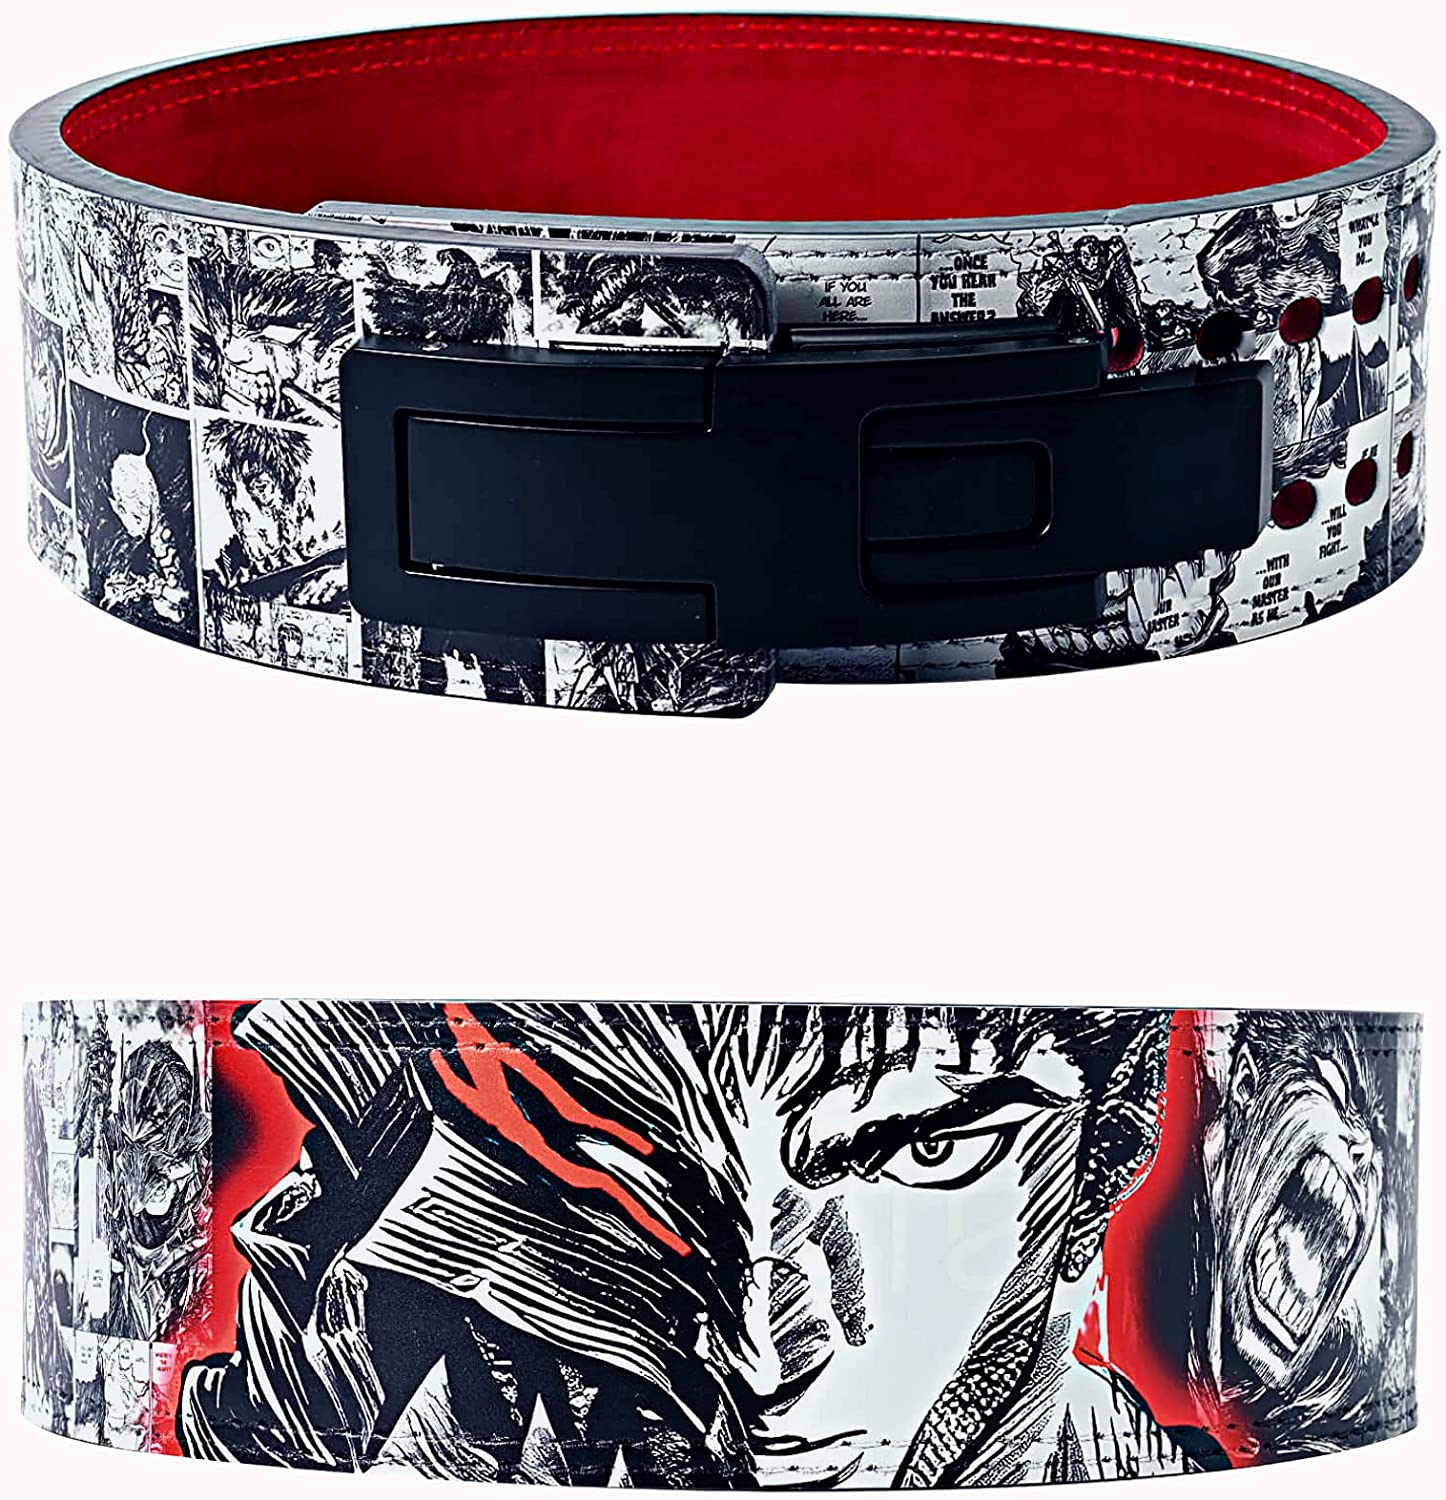  Anime Powerlifting Belt with Popular Demon-Inspired